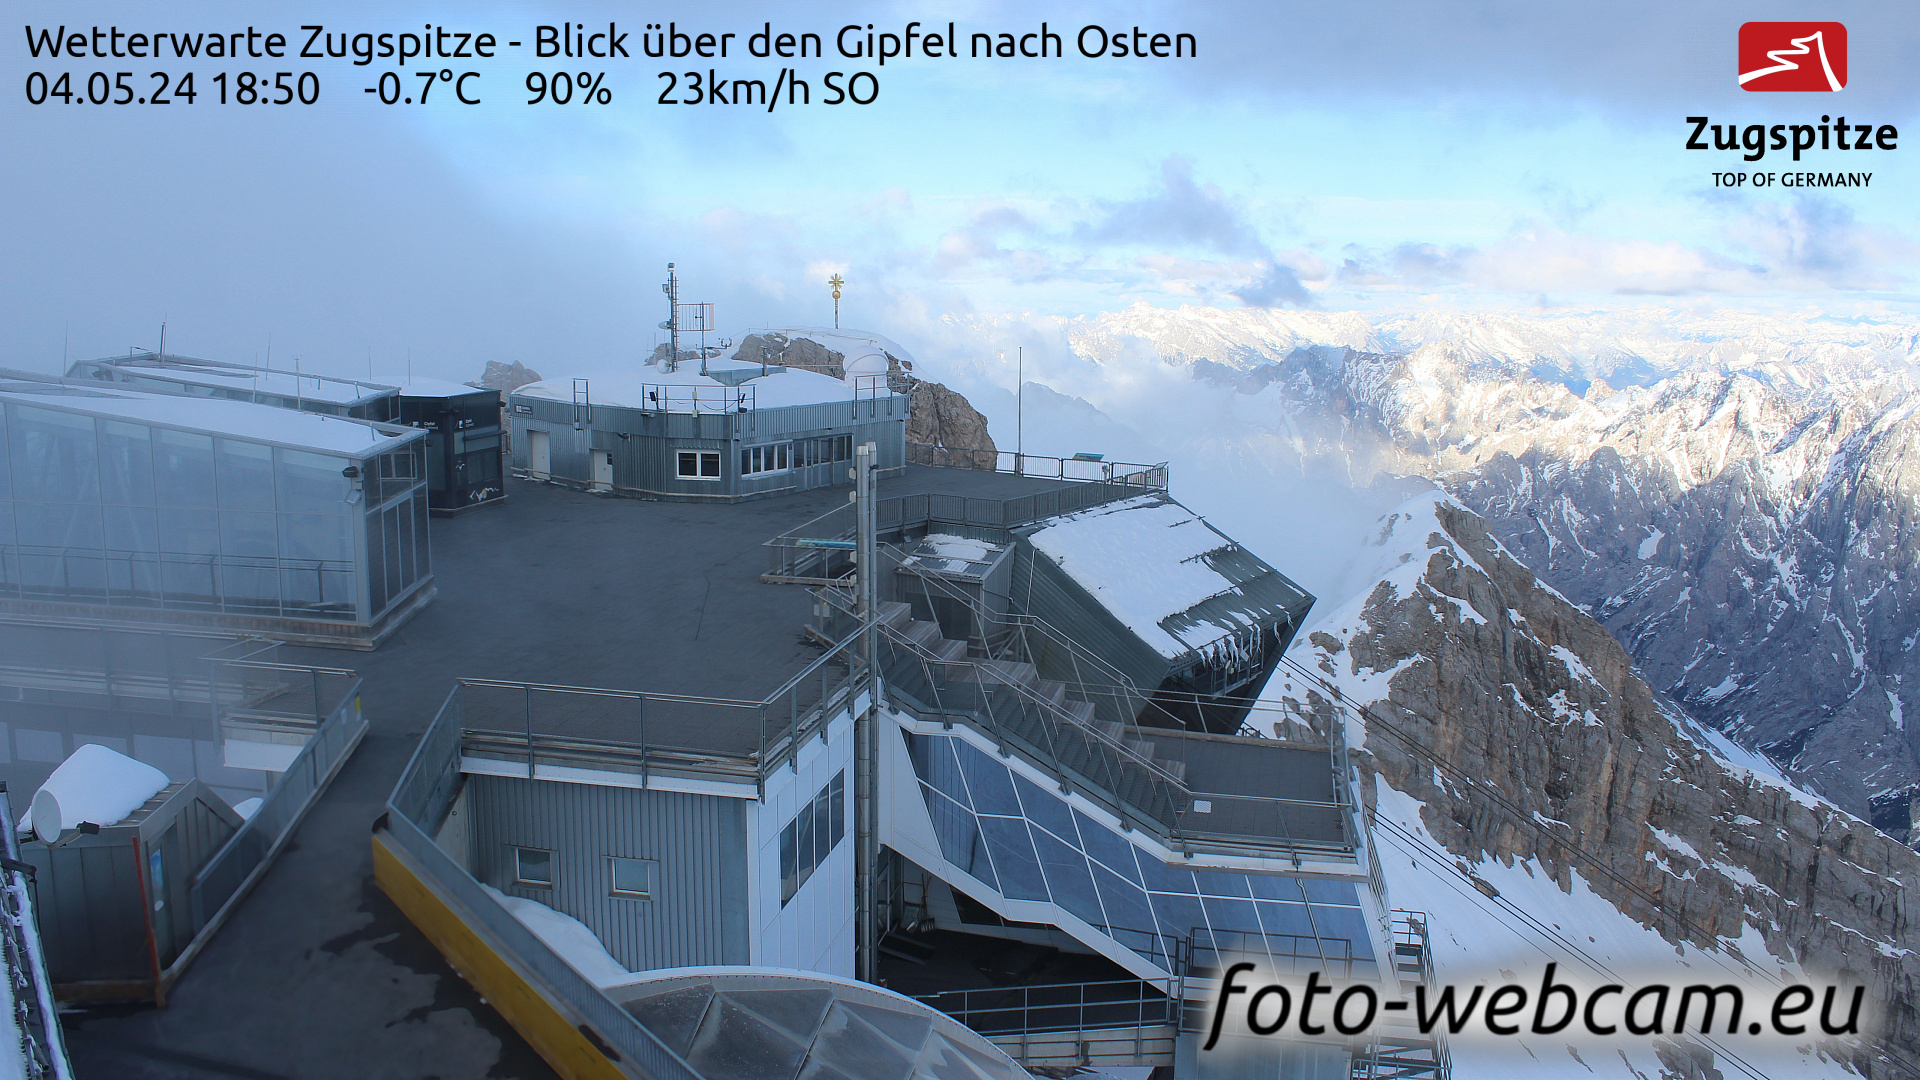 Zugspitze Sun. 18:55